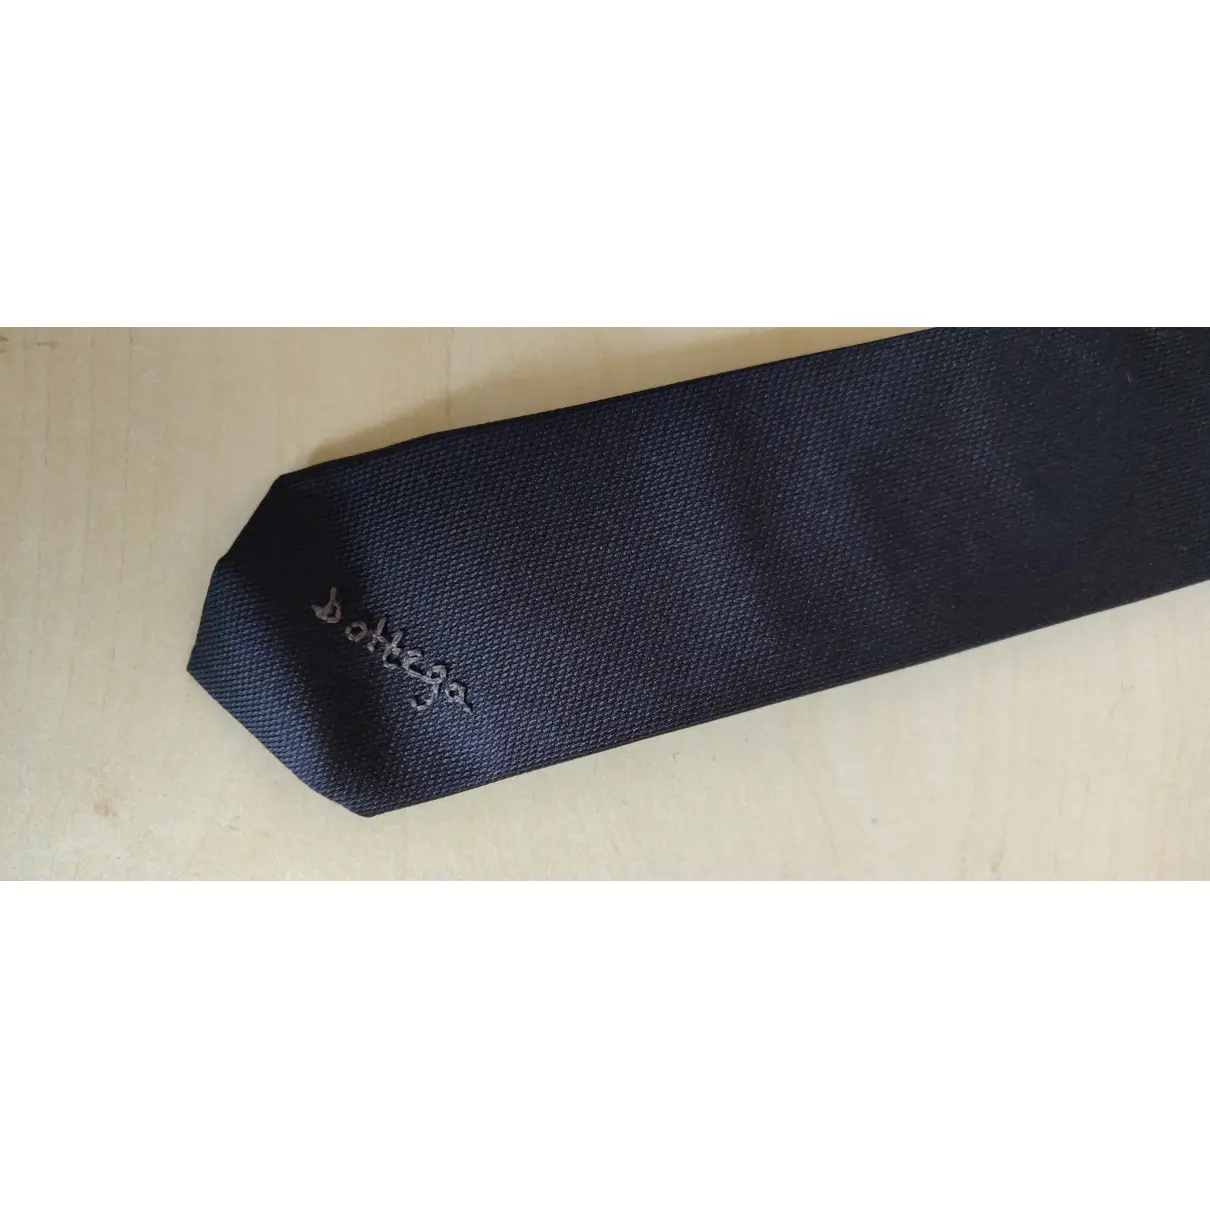 Buy Bottega Veneta Silk tie online